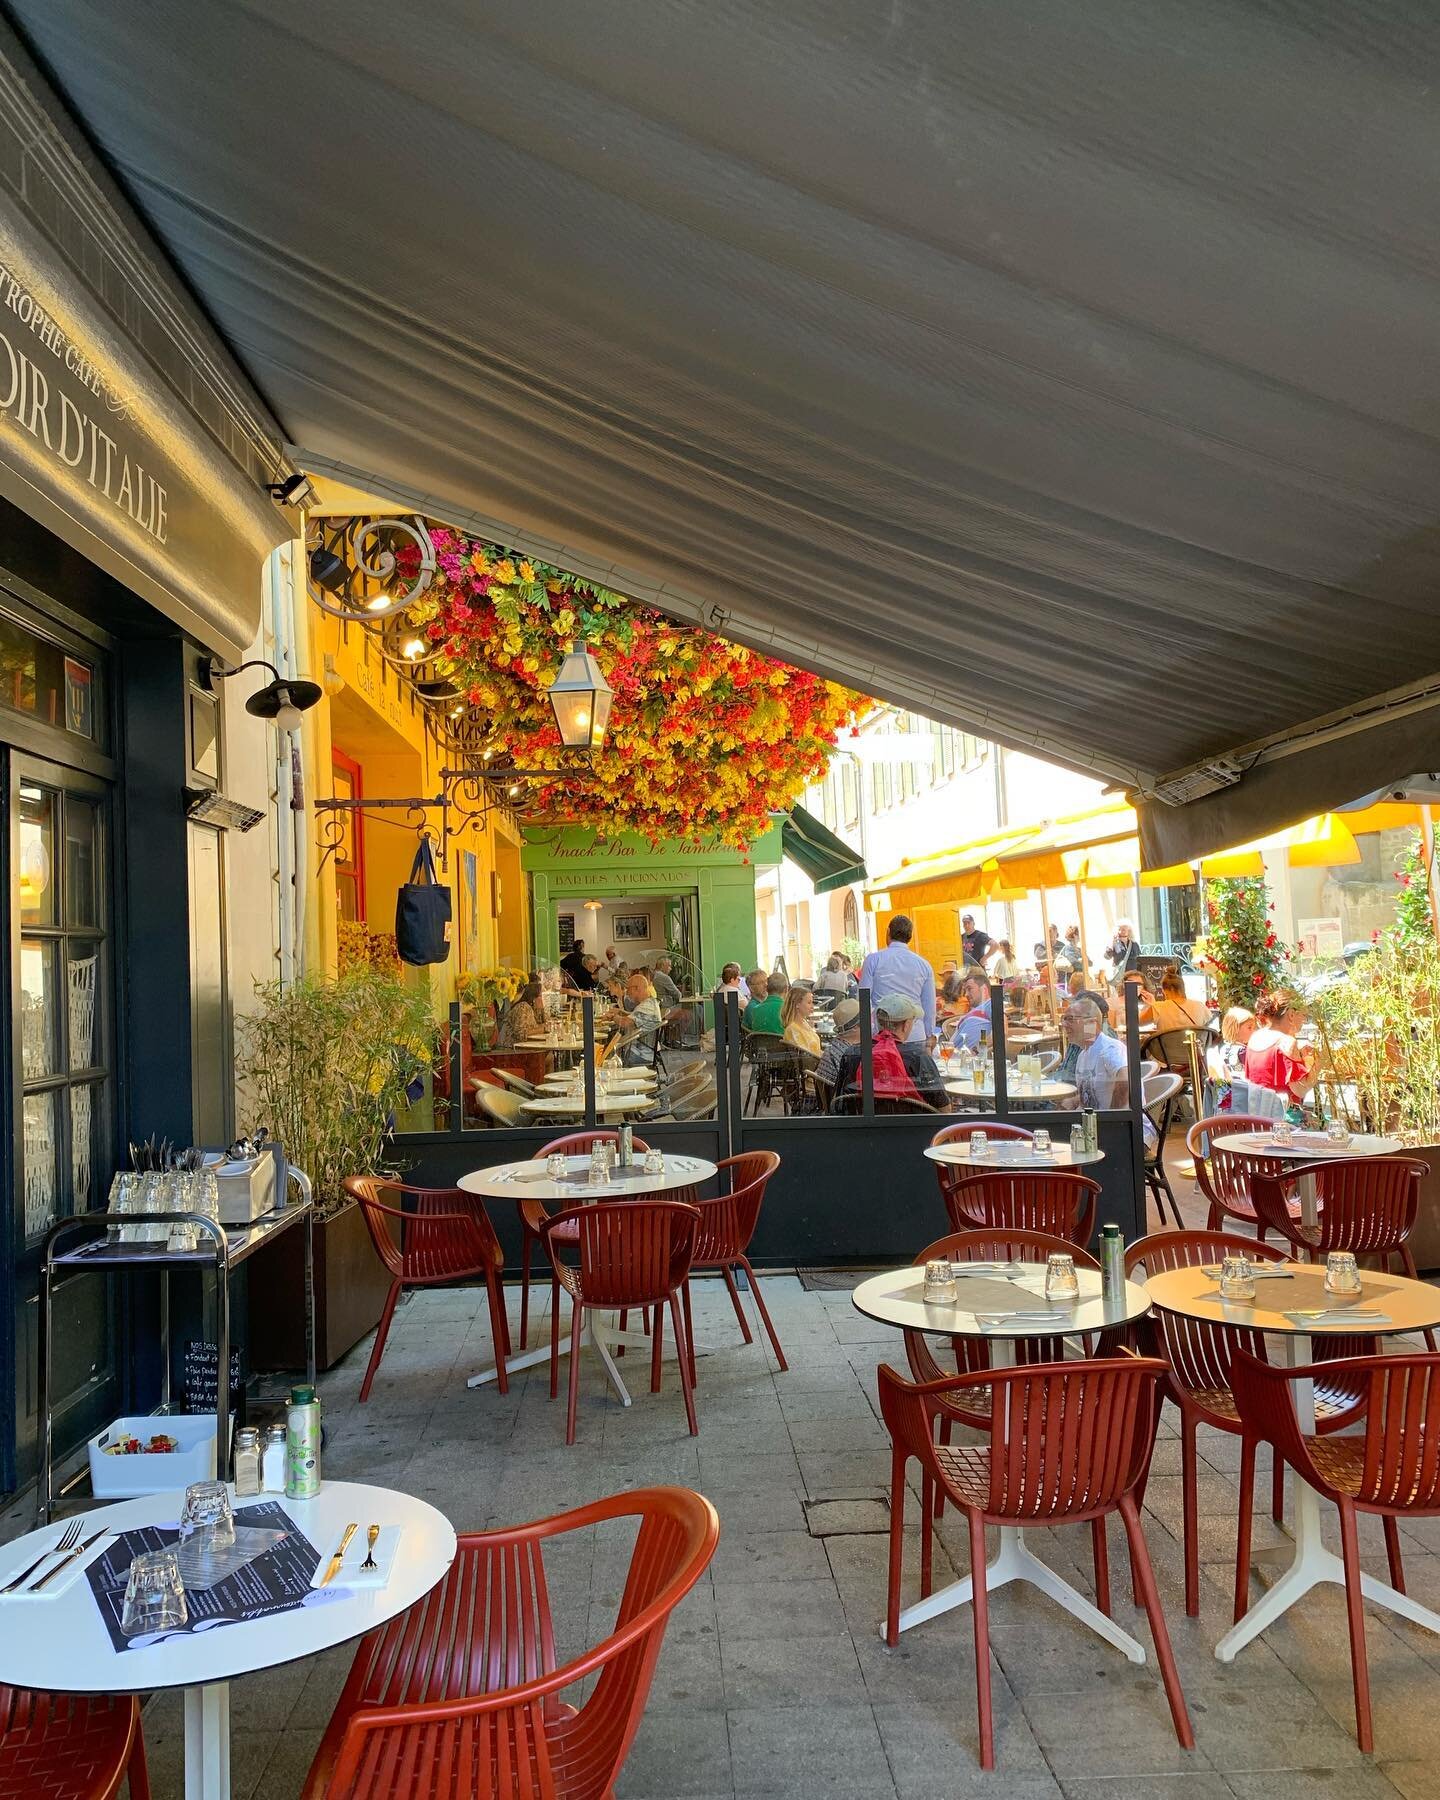 Terrasse du caf&eacute; le soir, Place du forum, Arles, France
Vincent van Gogh
1888
.
.
.
.
.
#kunst #expressionism #vincentvangogh #arthistory #kunstgeschichte #artinprovence #oilpainting #arles #painting #expression #vangogh #patrimoine #artsy #ar